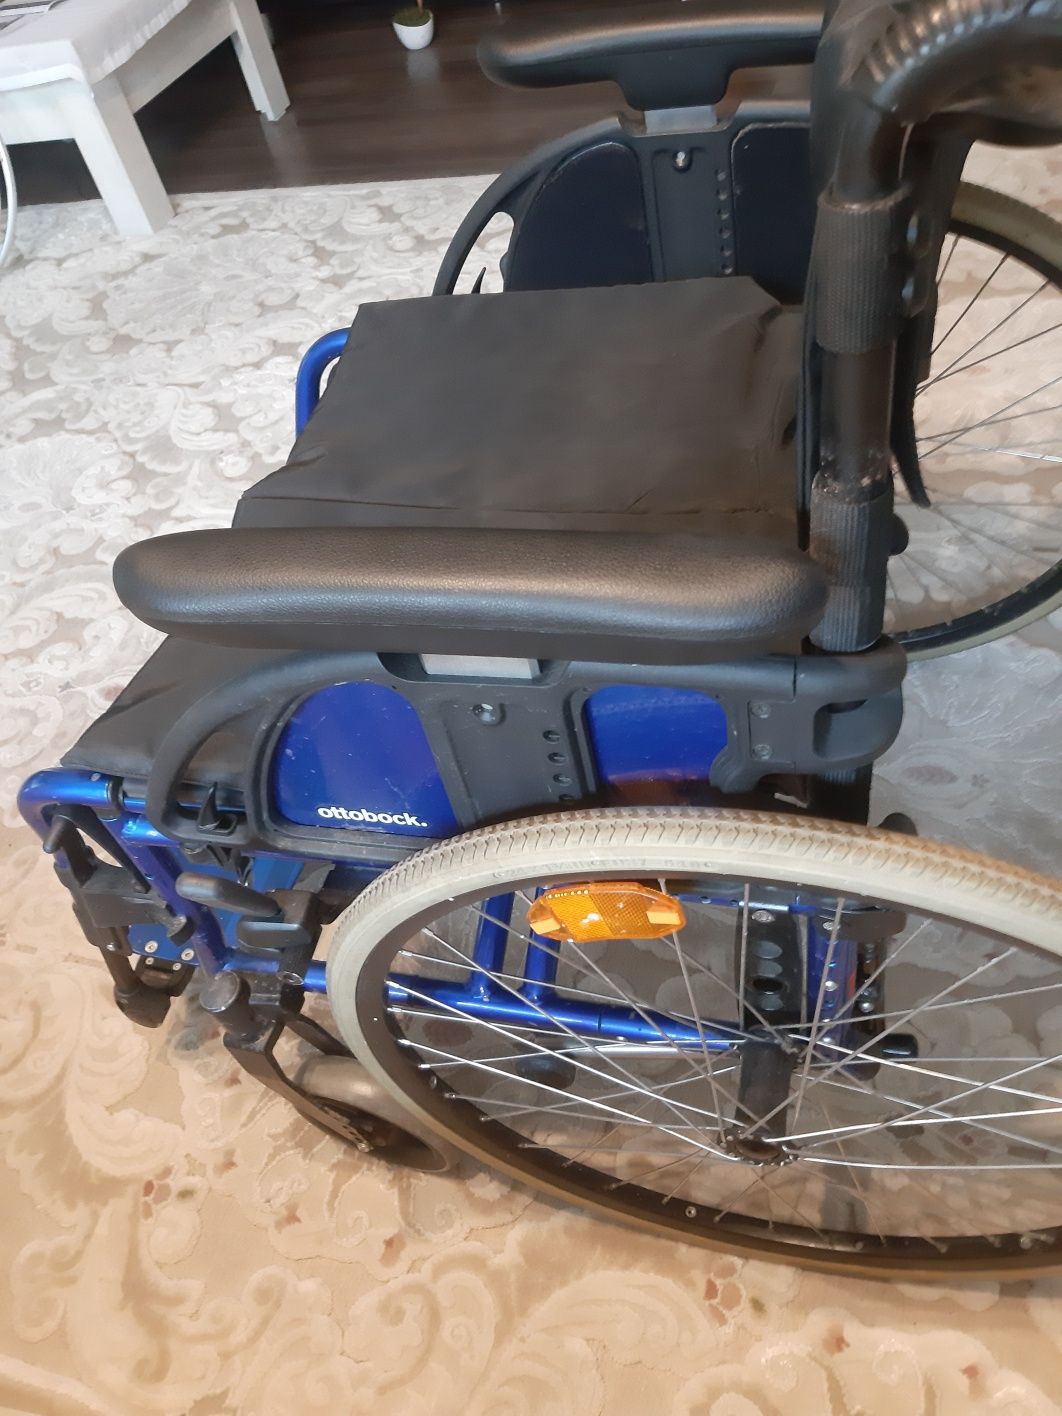 Vând scaun cu rotile, pliabil, pentru persoane cu dizabilitati